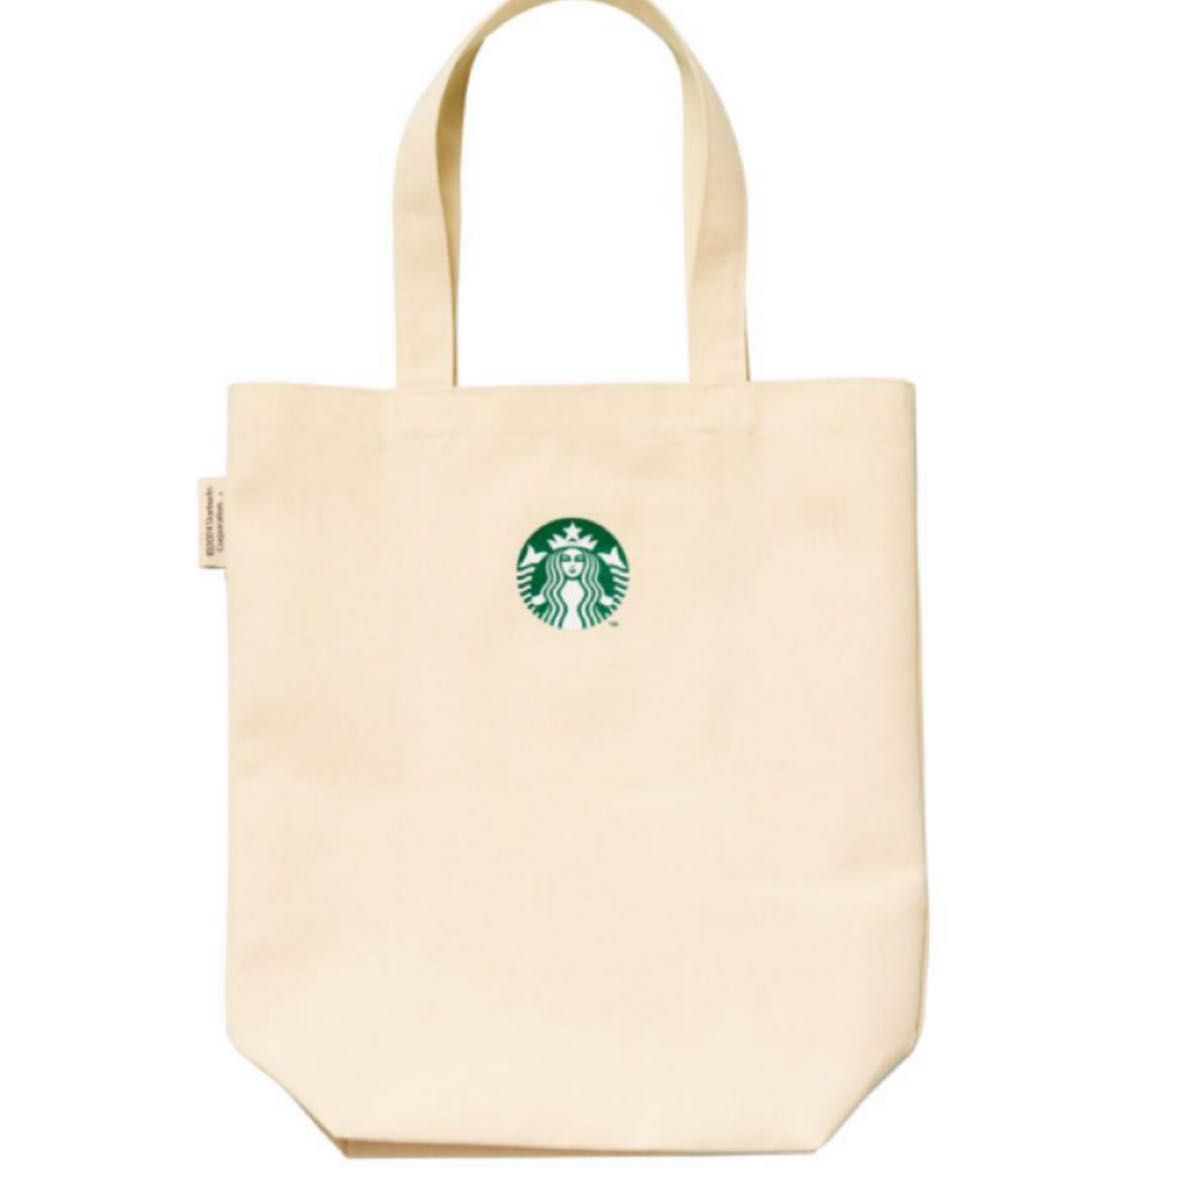 【Starbucks】非売品 新品未使用 スタバ トートバッグ